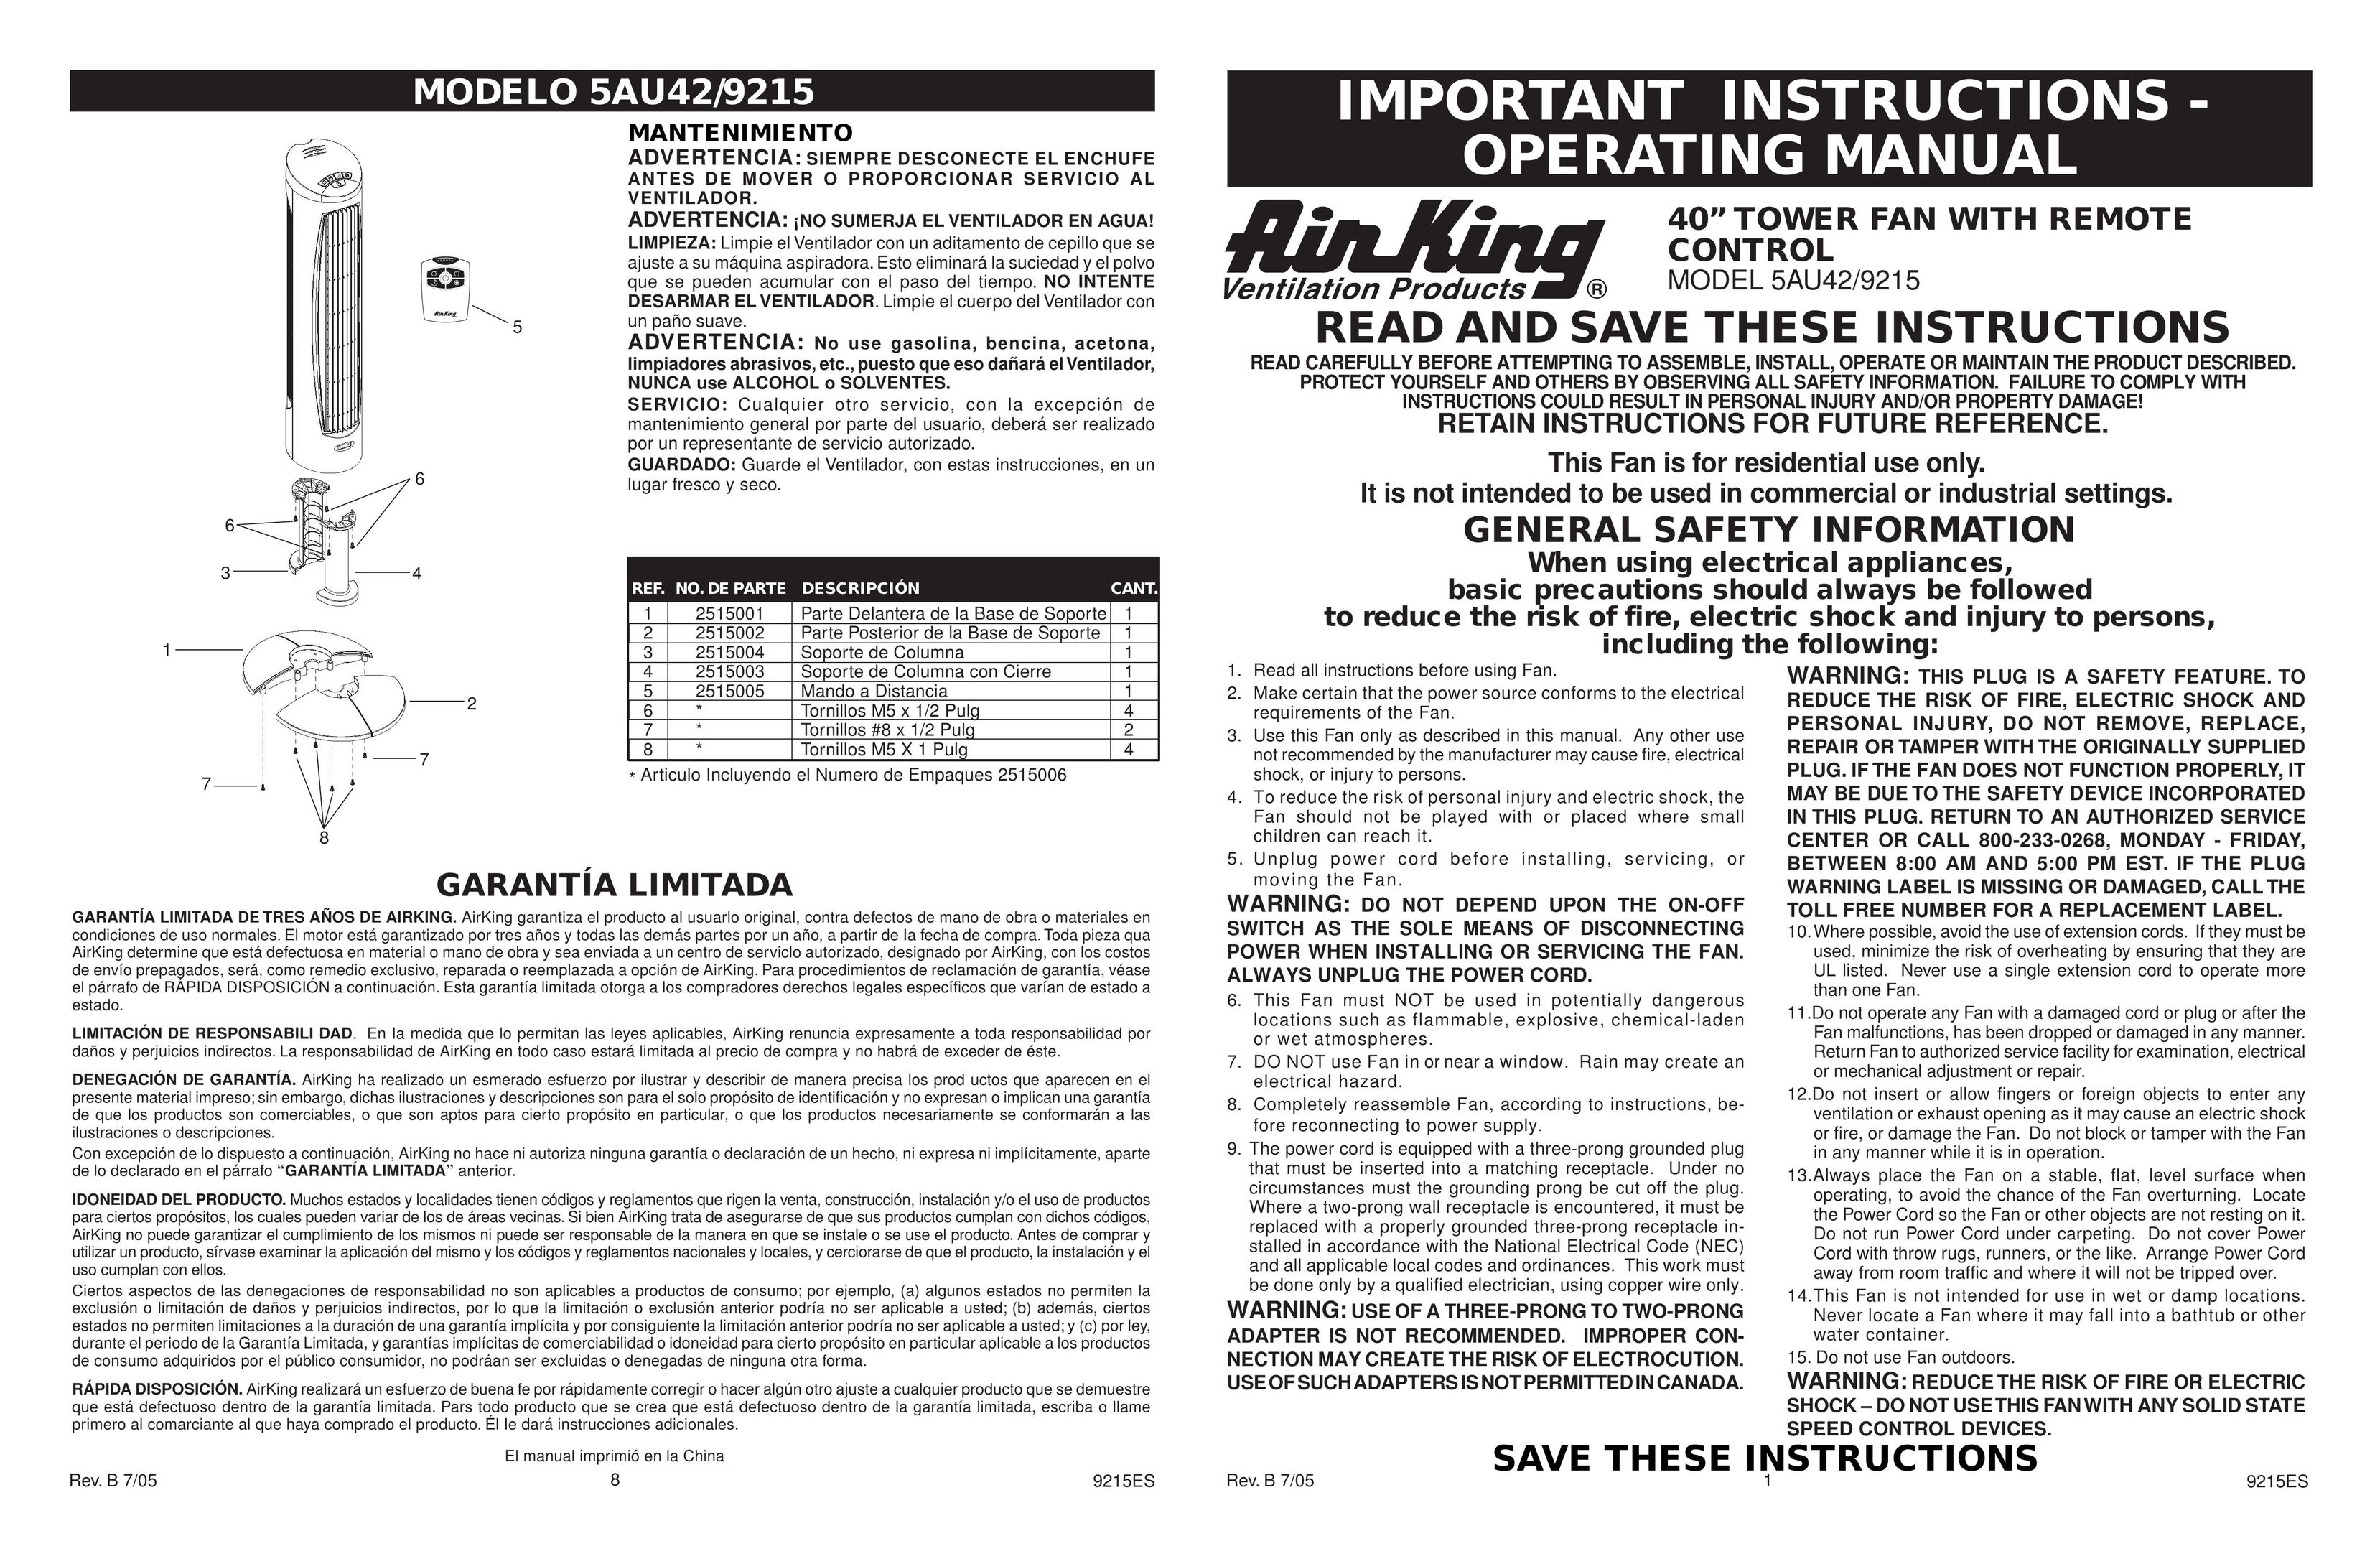 Air King 5AU42/9215 Air Conditioner User Manual